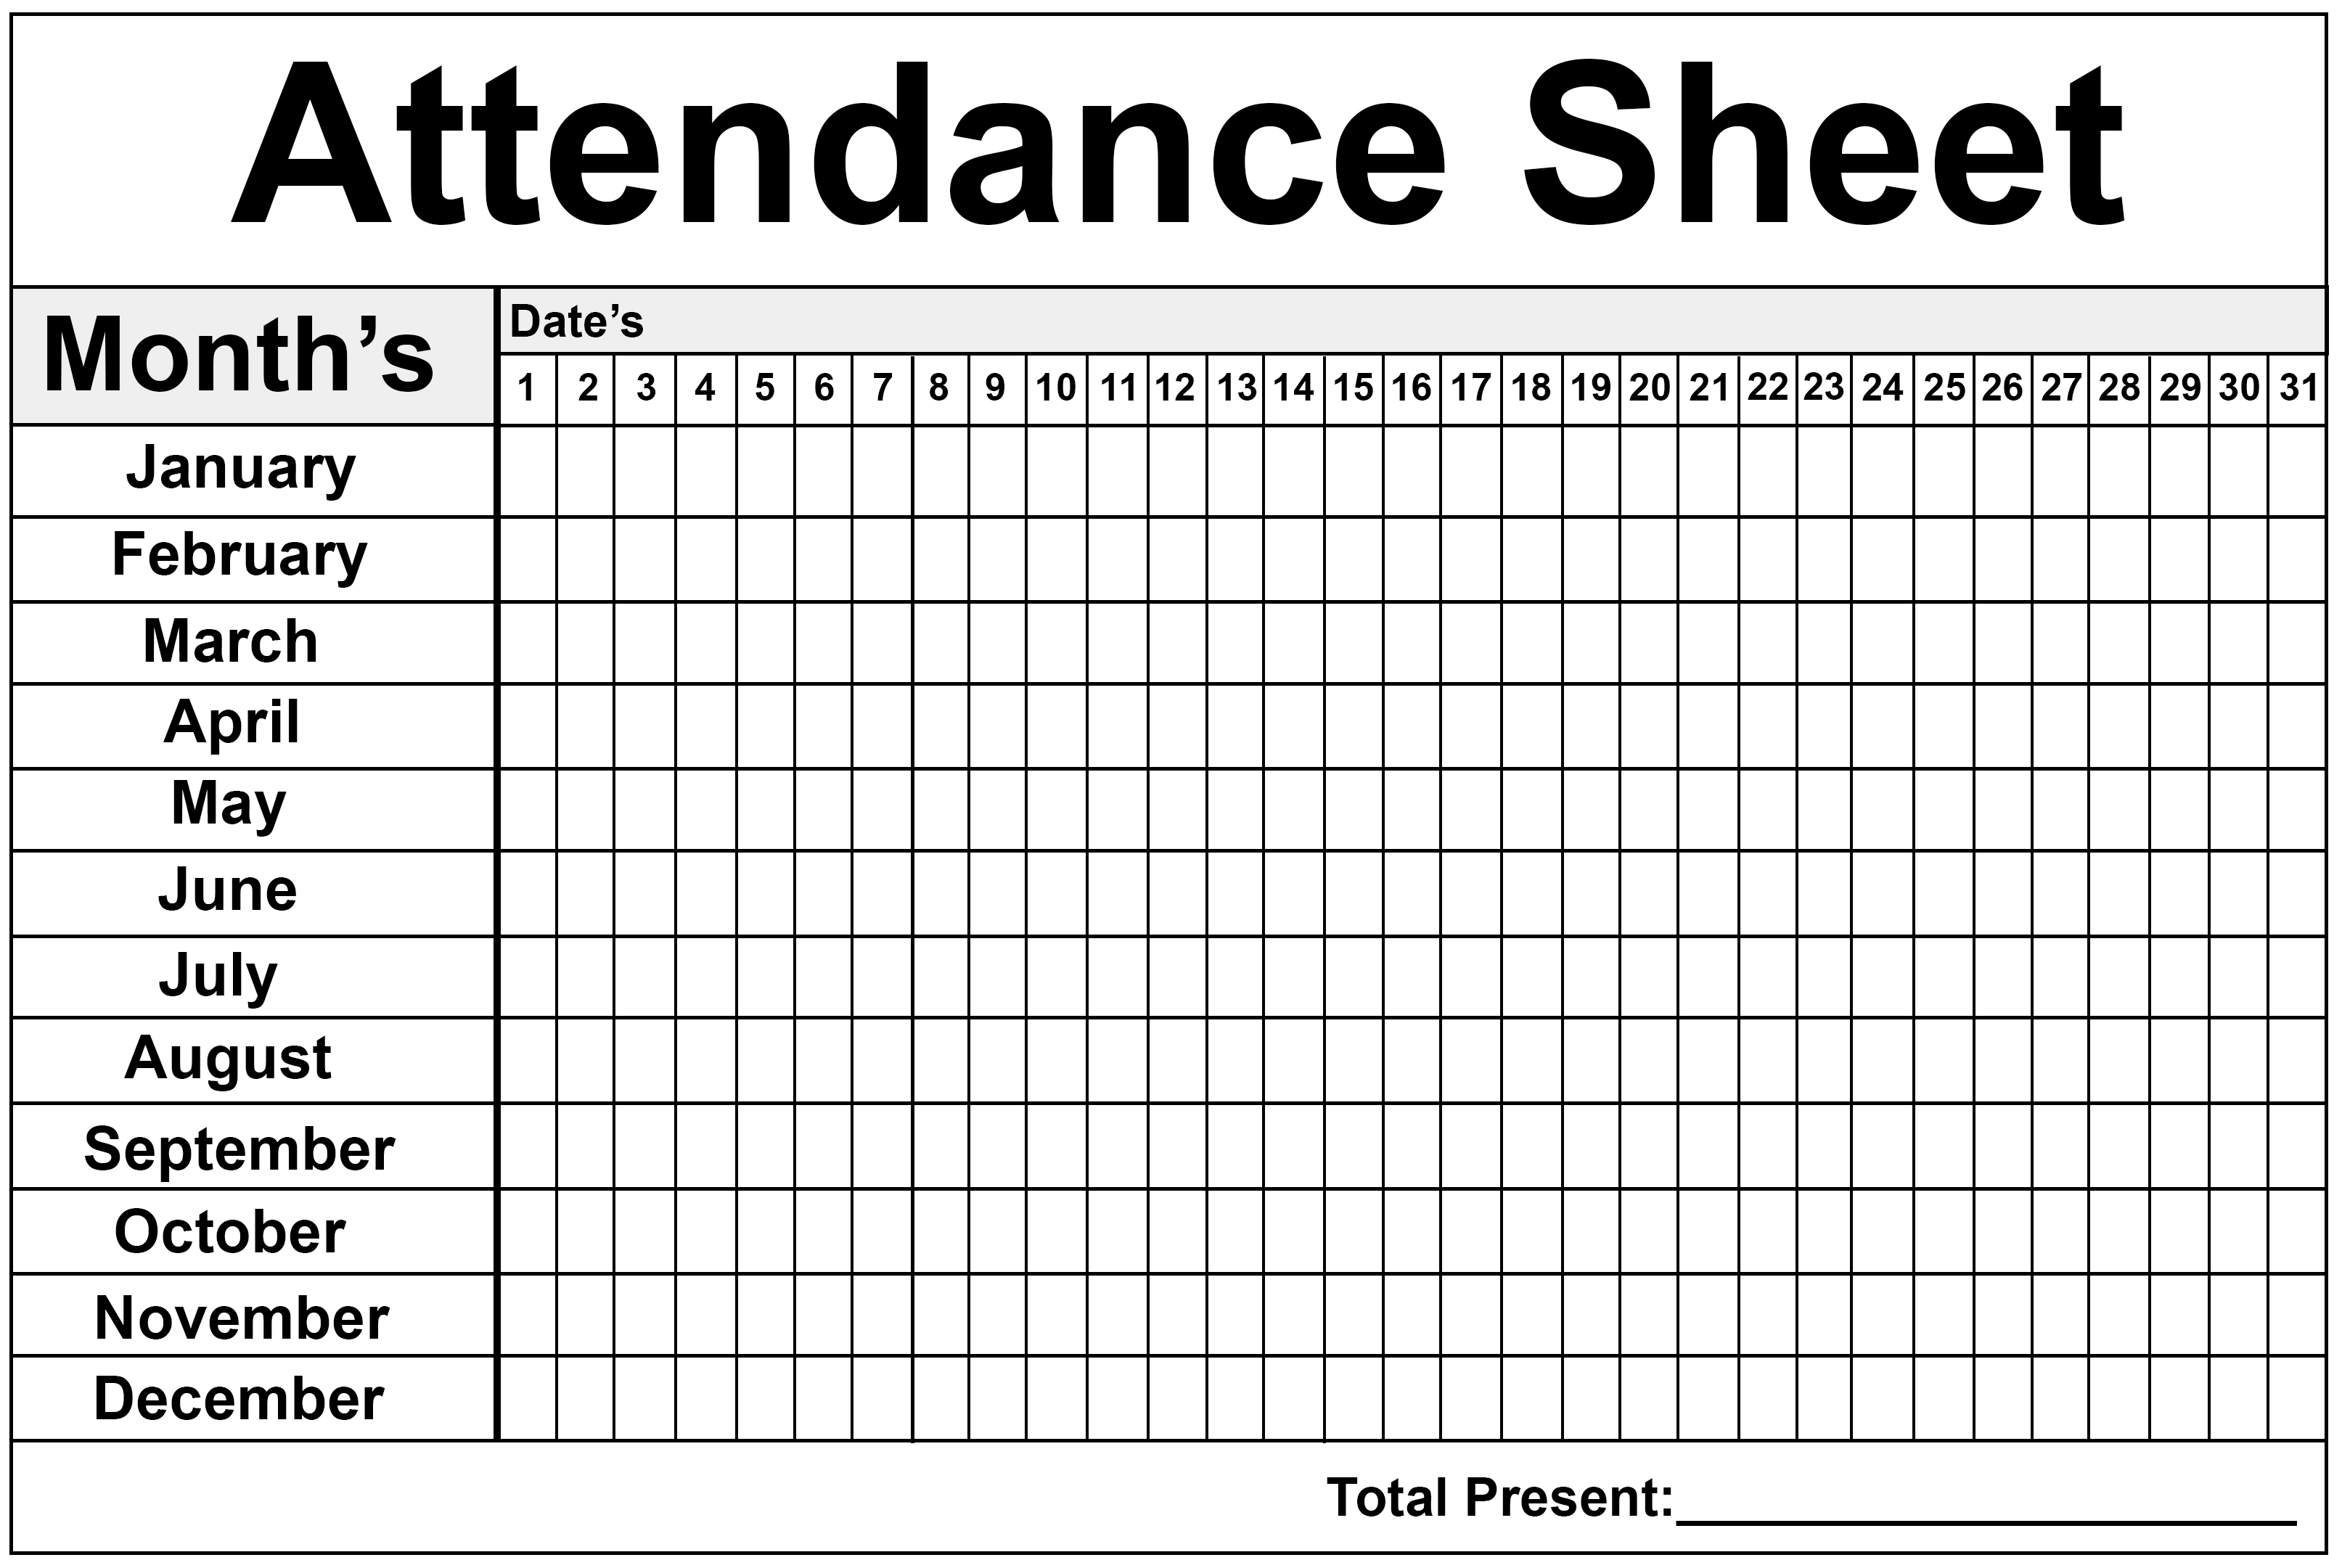 Employee Attendance Tracker Sheet 2019 | Printable Calendar Diy within 2020 Employee Attendance Calendar